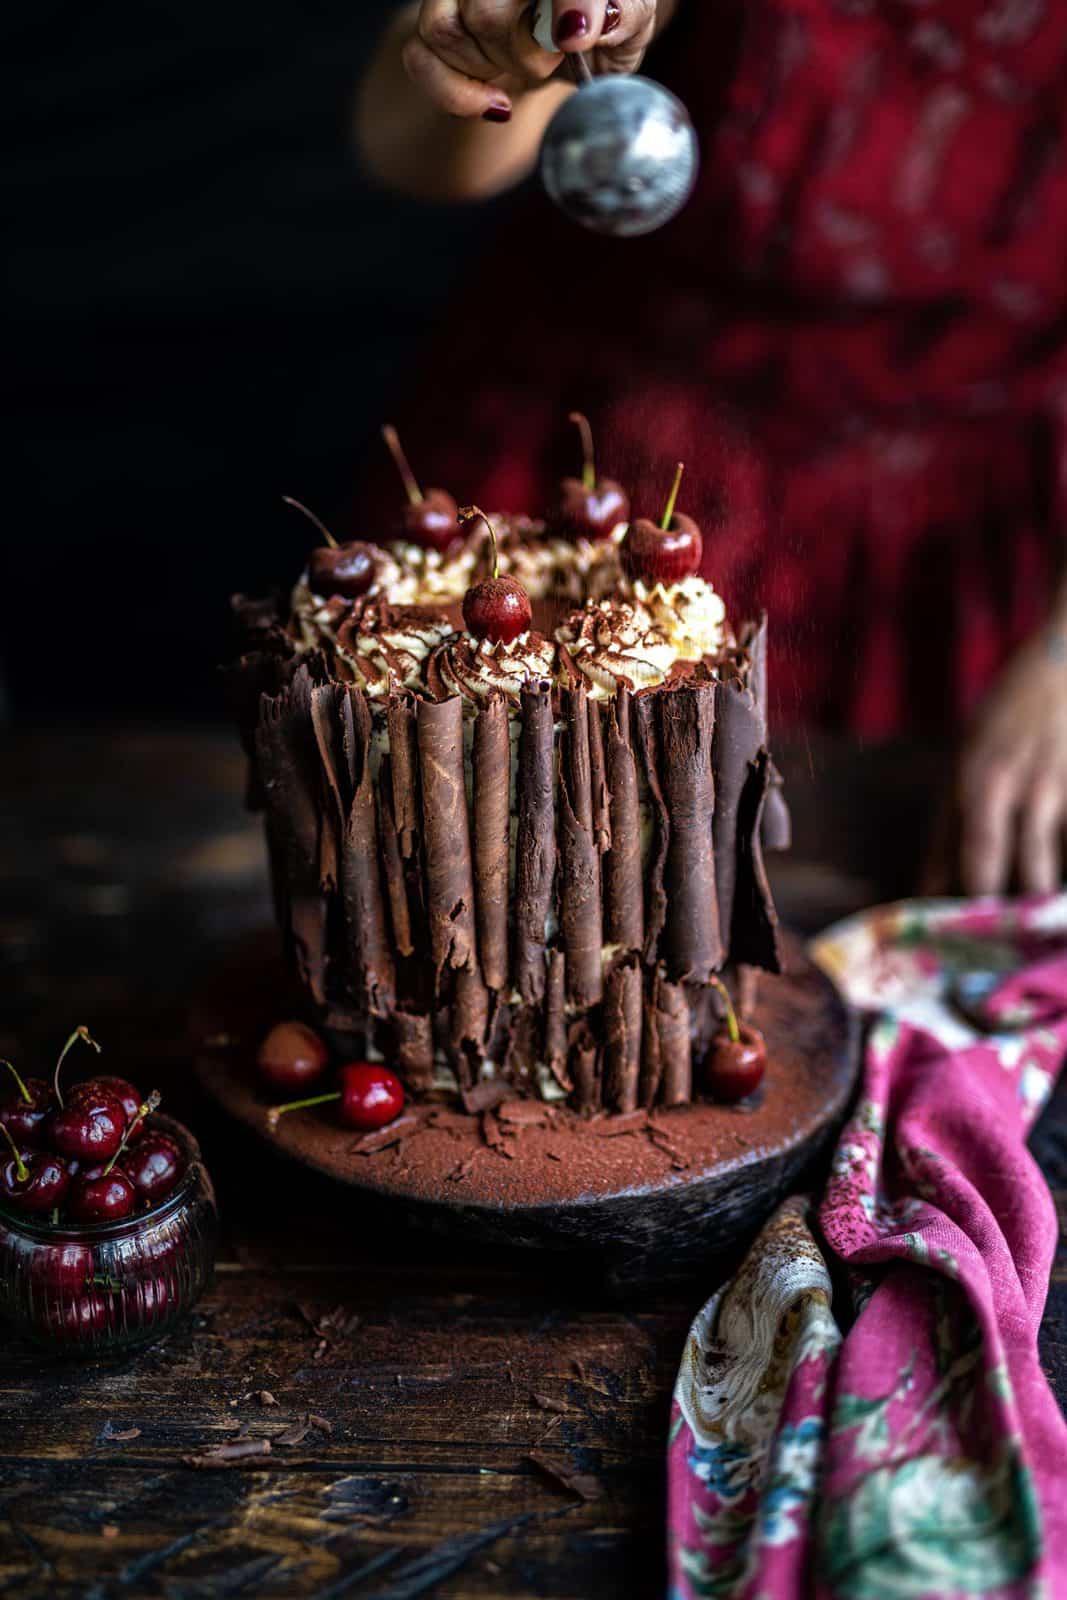 Black Forest Cake Recipe, German Chocolate Cake